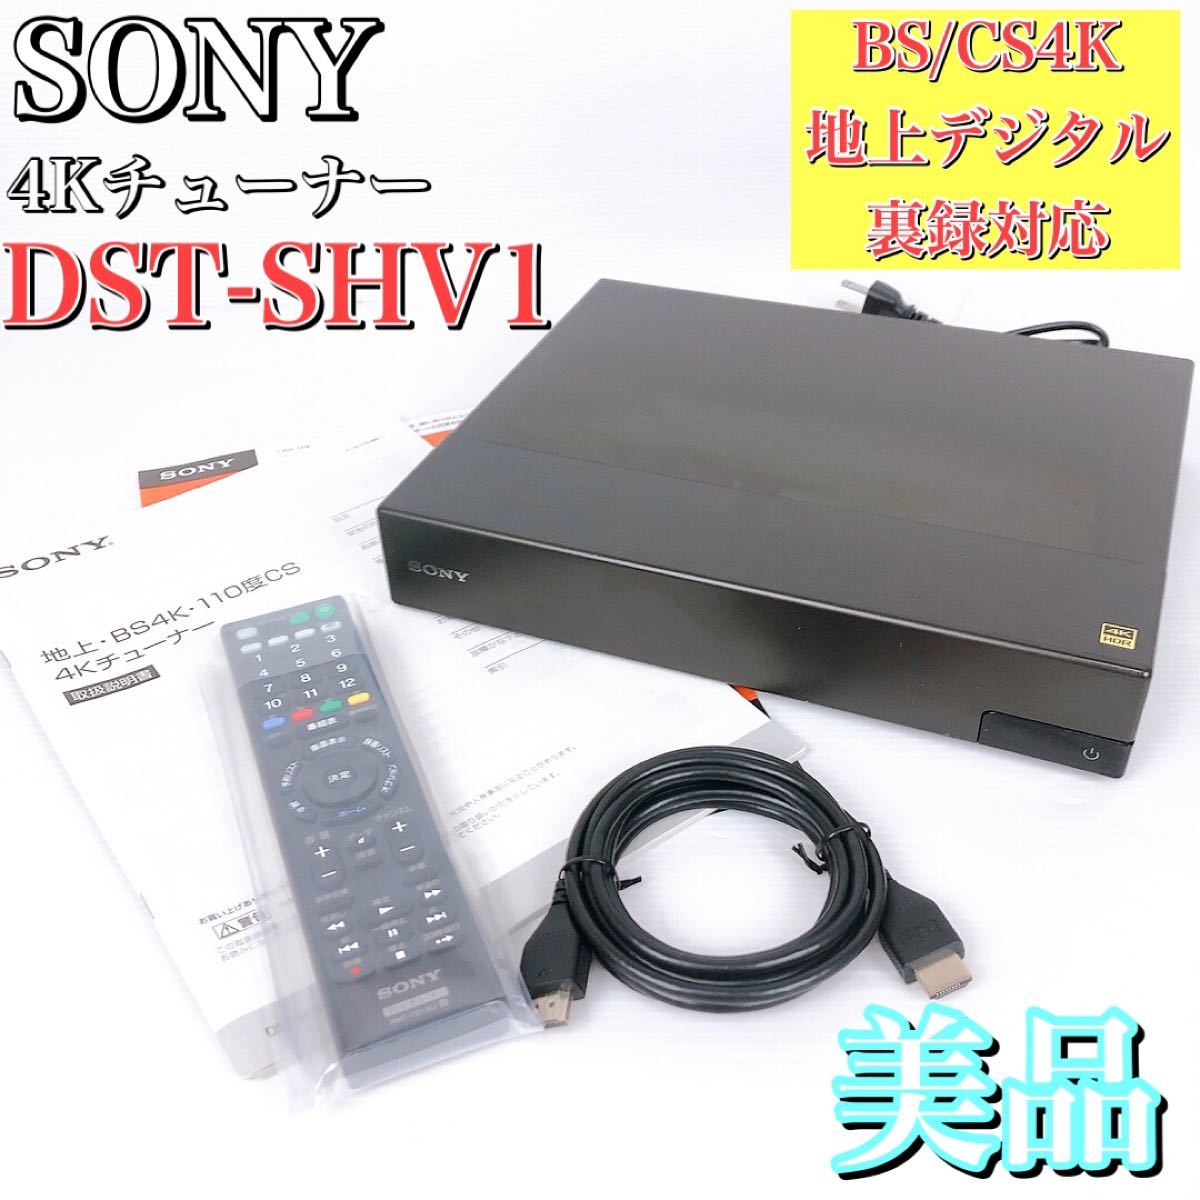 SONY BS CS 4Kチューナー DST-SHV1 - 映像機器